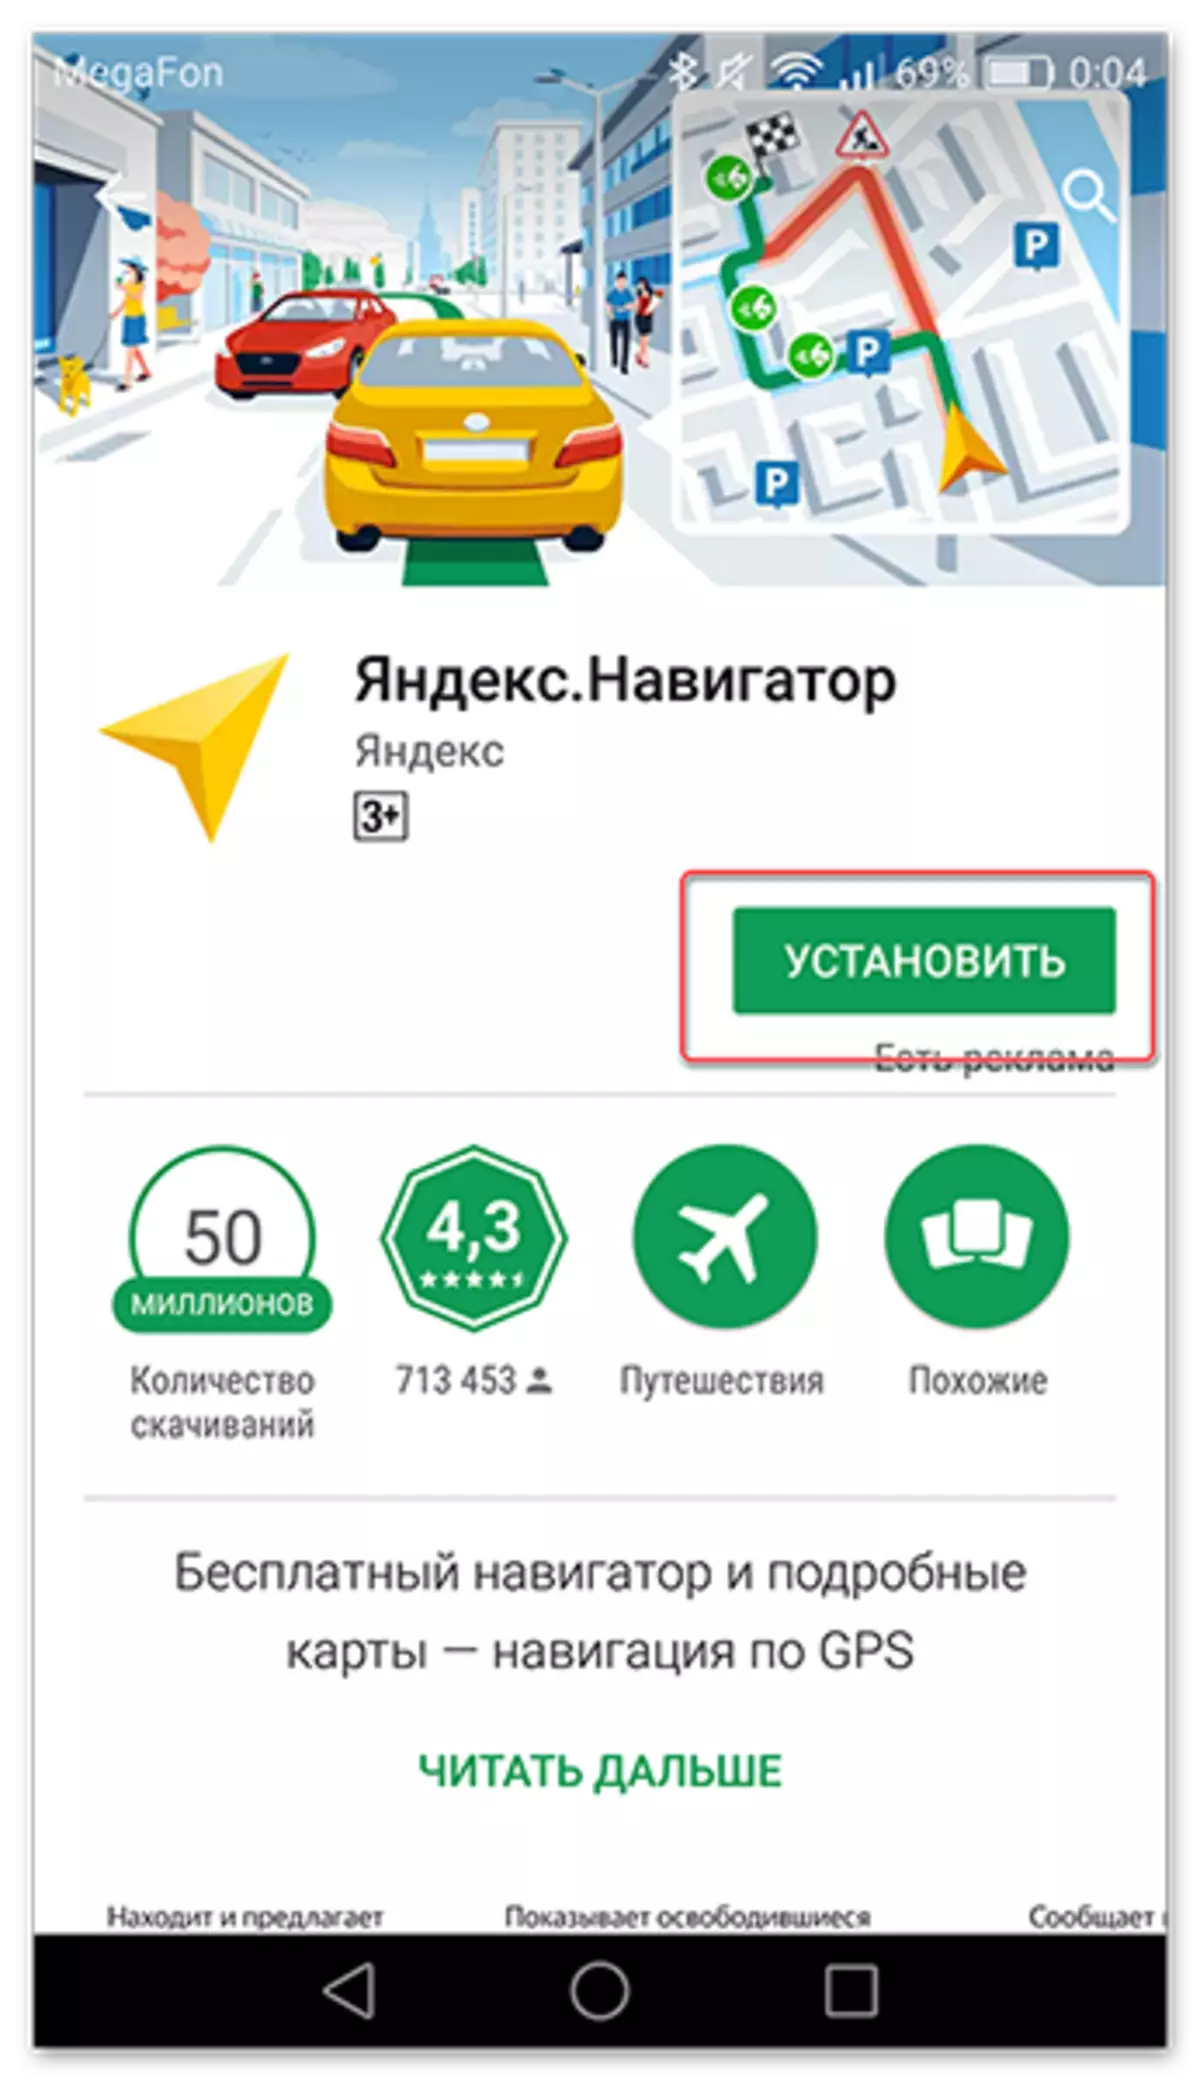 Nyem teem mus download tau Yandex. Navigator